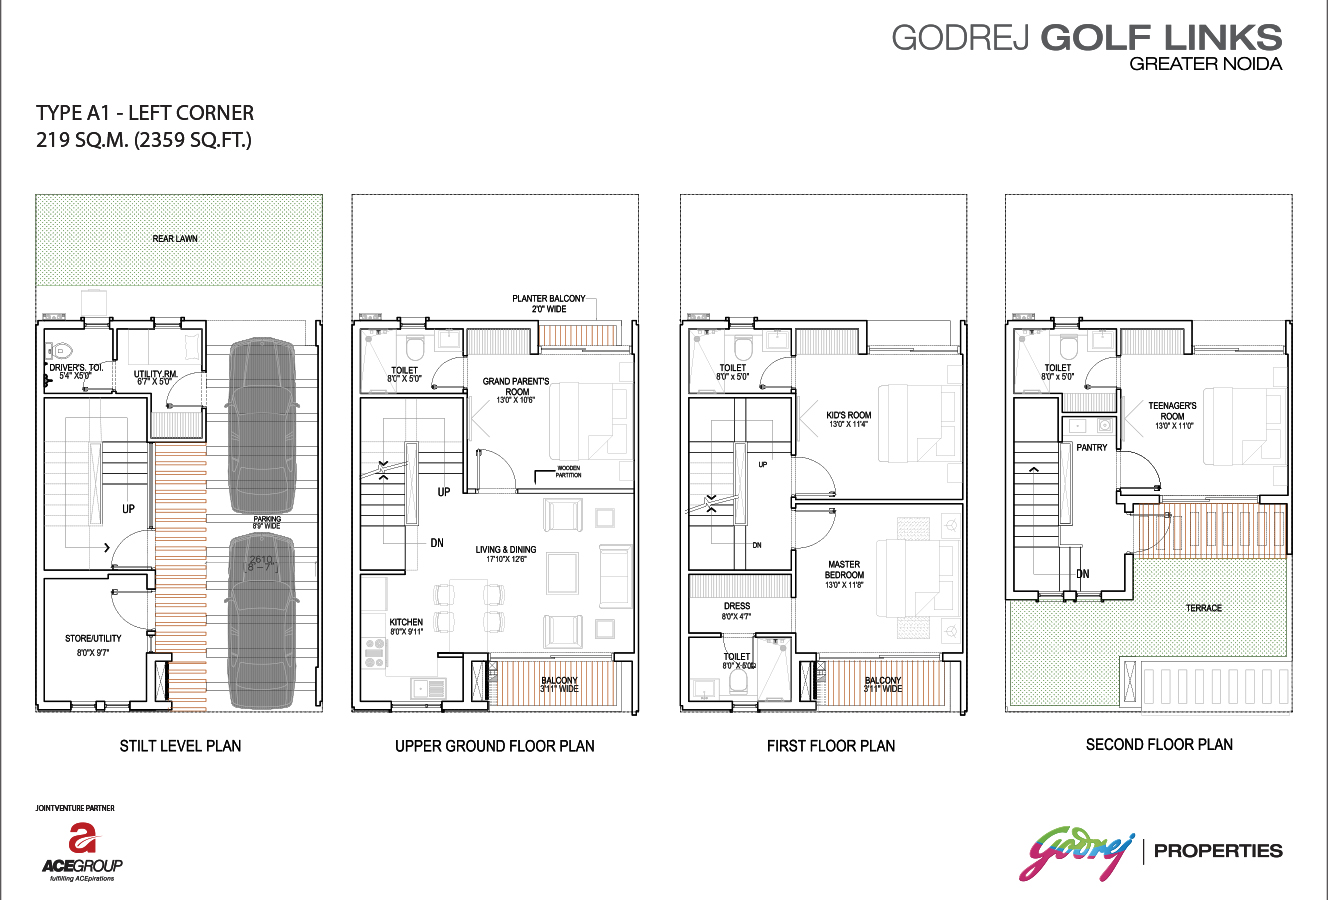 Godrej Crest Villas type-A1 Left Corner 2359 sqft